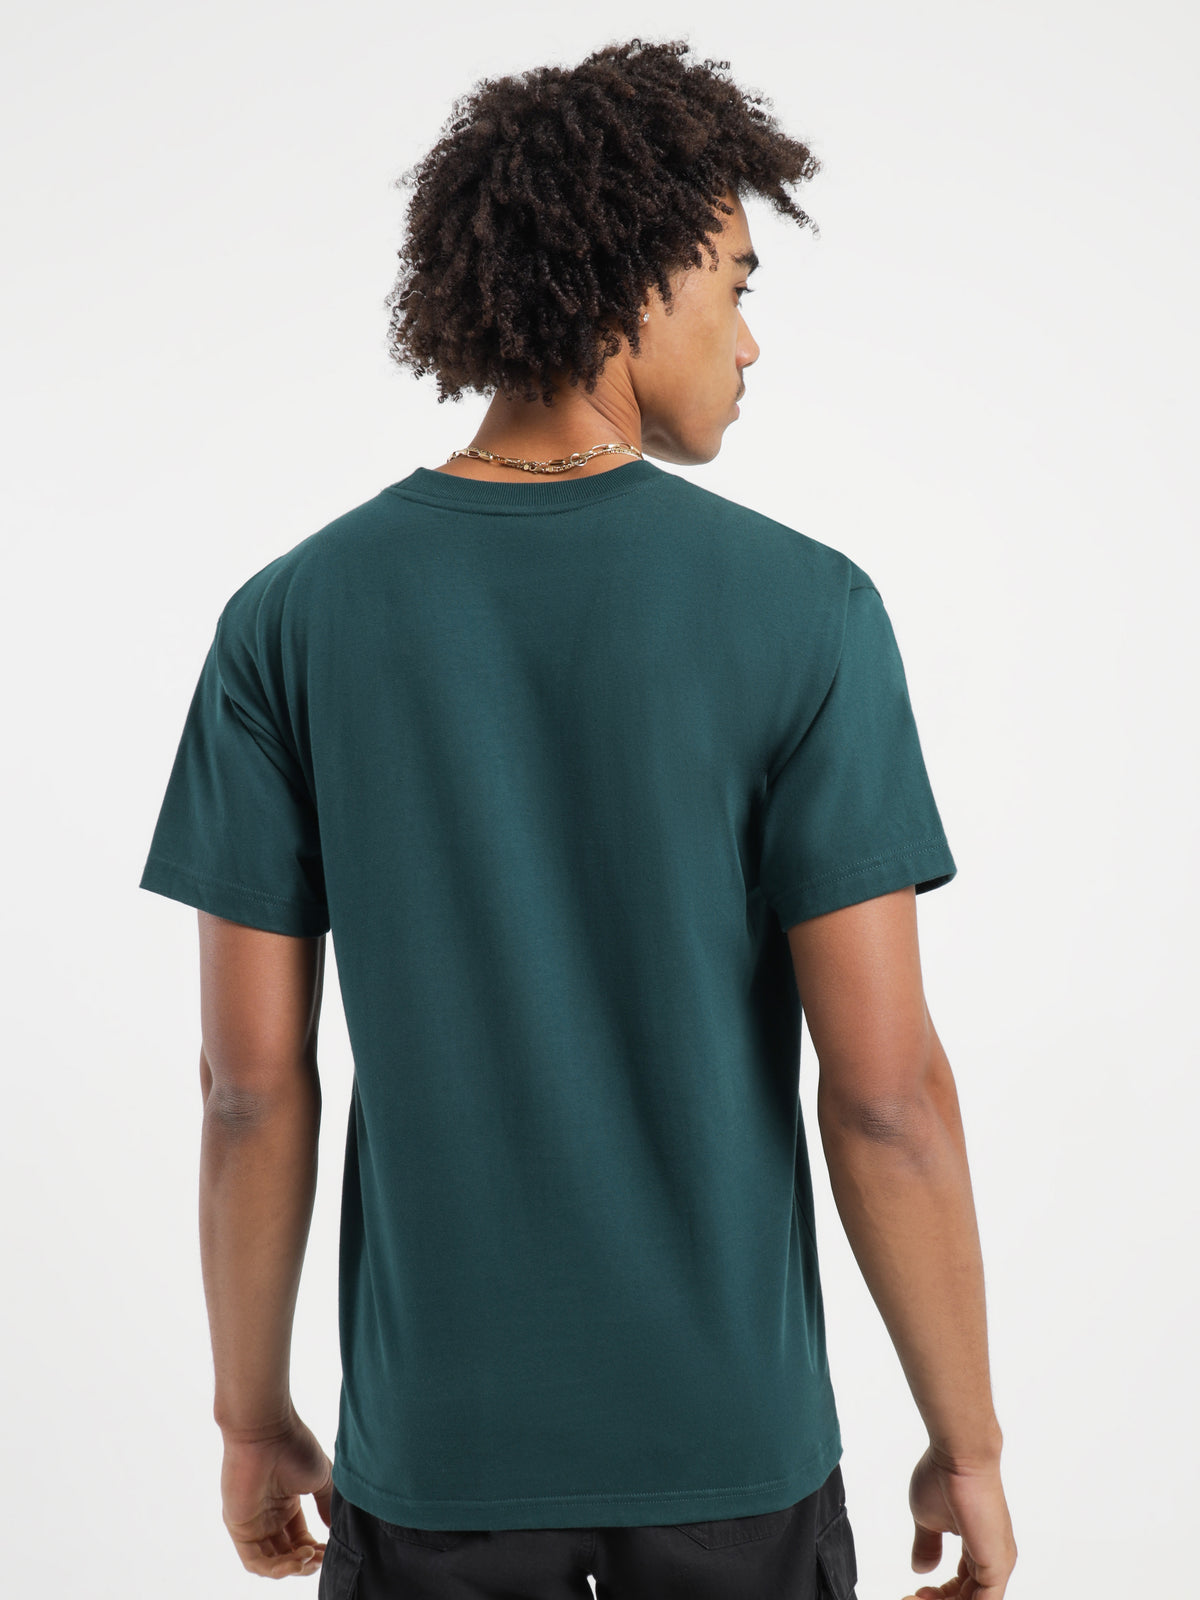 SS Heavyweight Box T-Shirt in Green